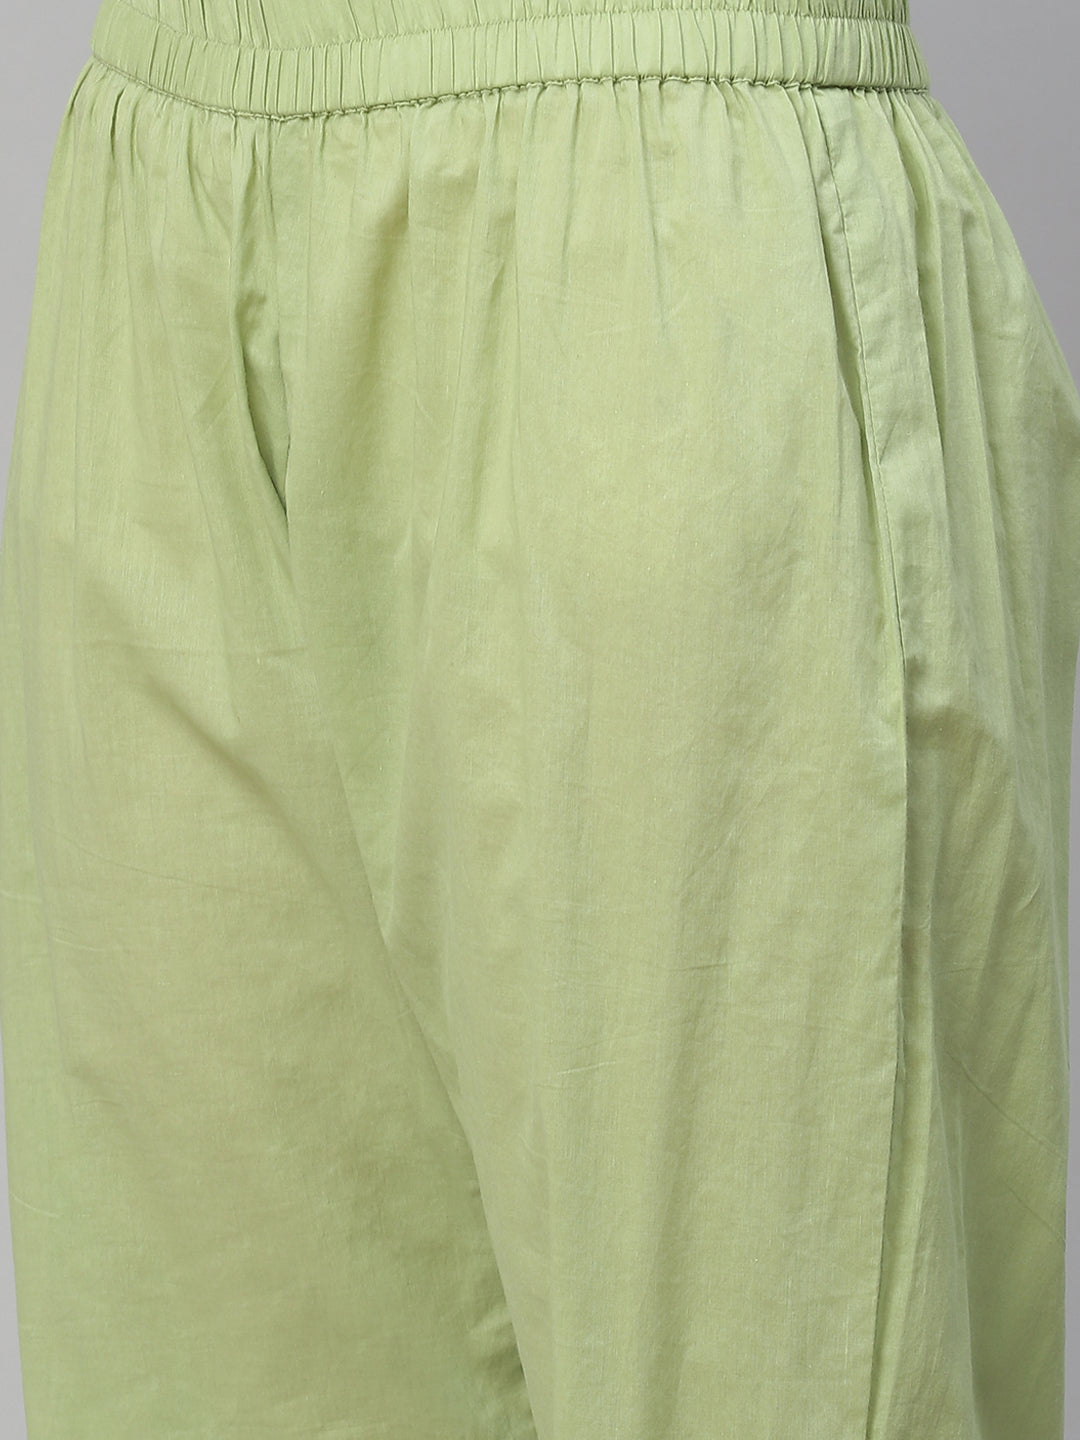 Women's Green Cotton Kurta Pant Set - Wahenoor